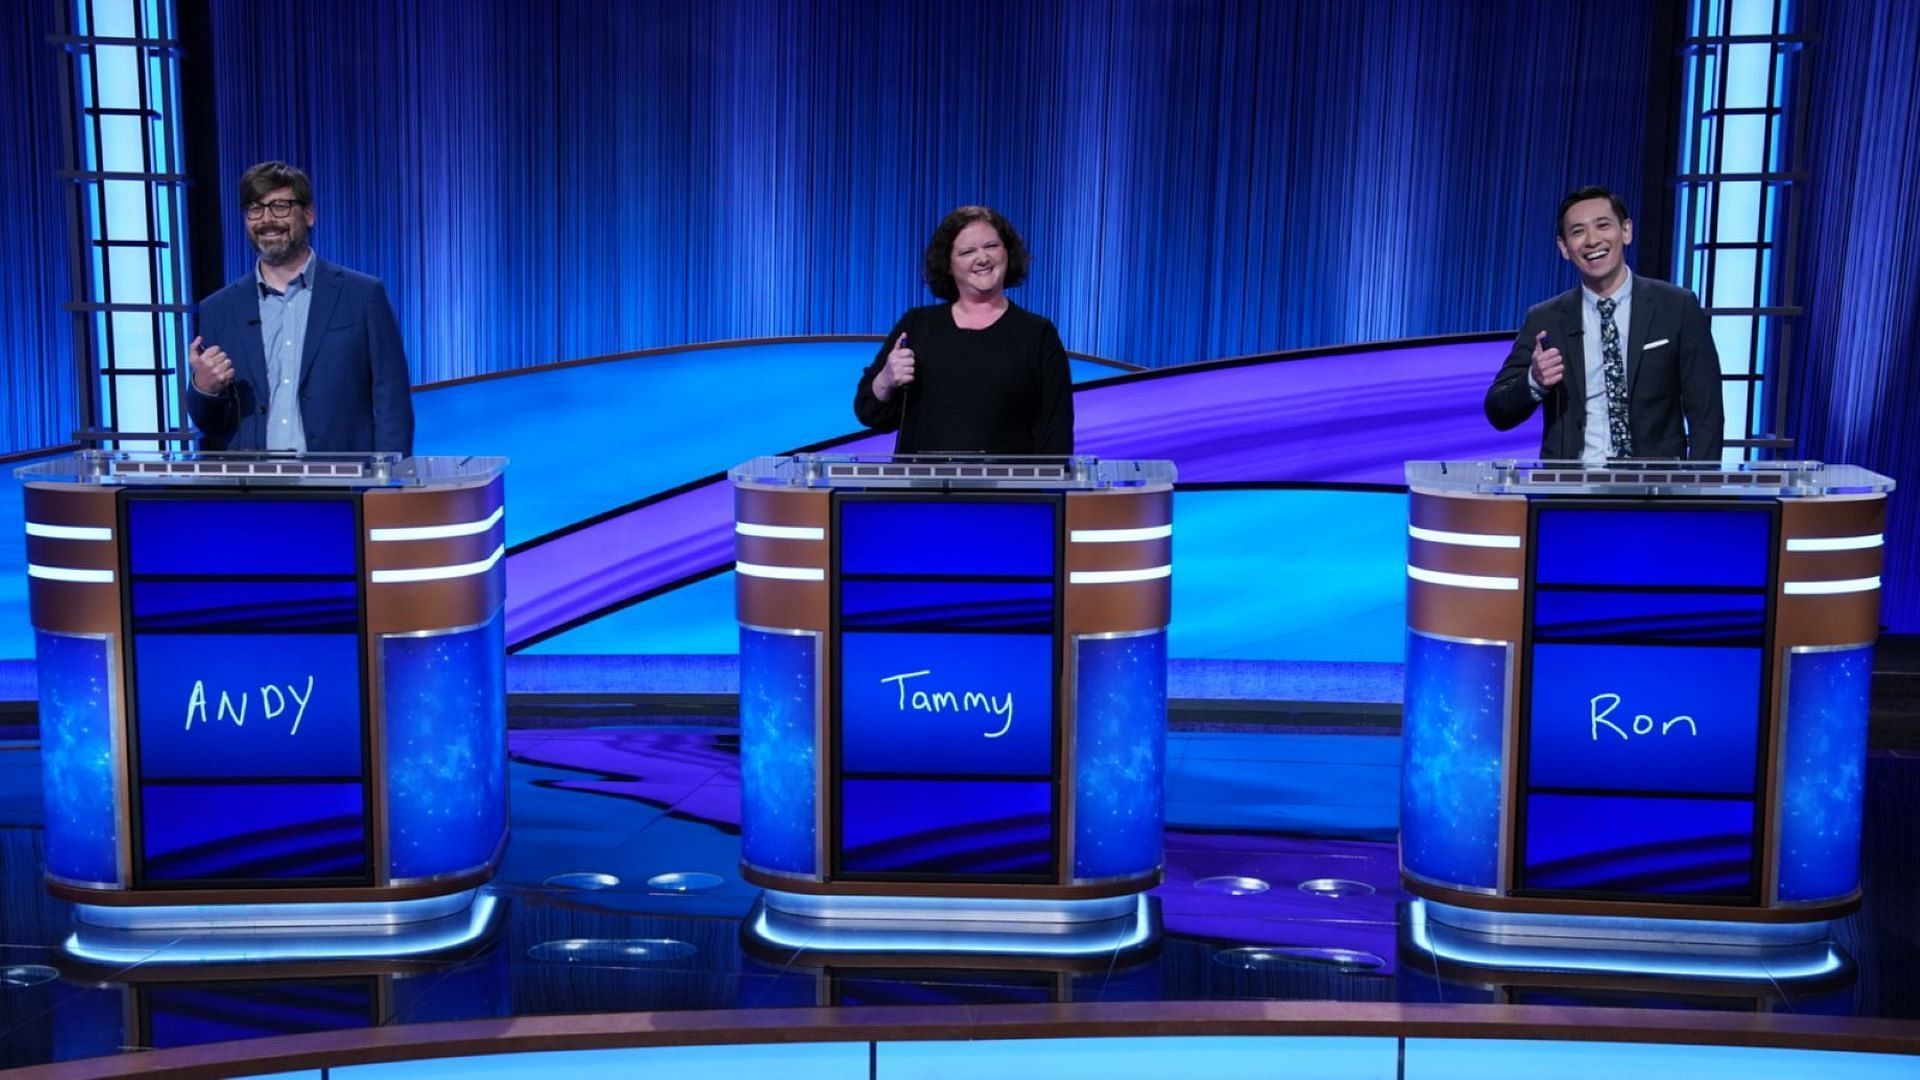 A still from Jeopardy! (Image via @Jeopardy/Instagram)